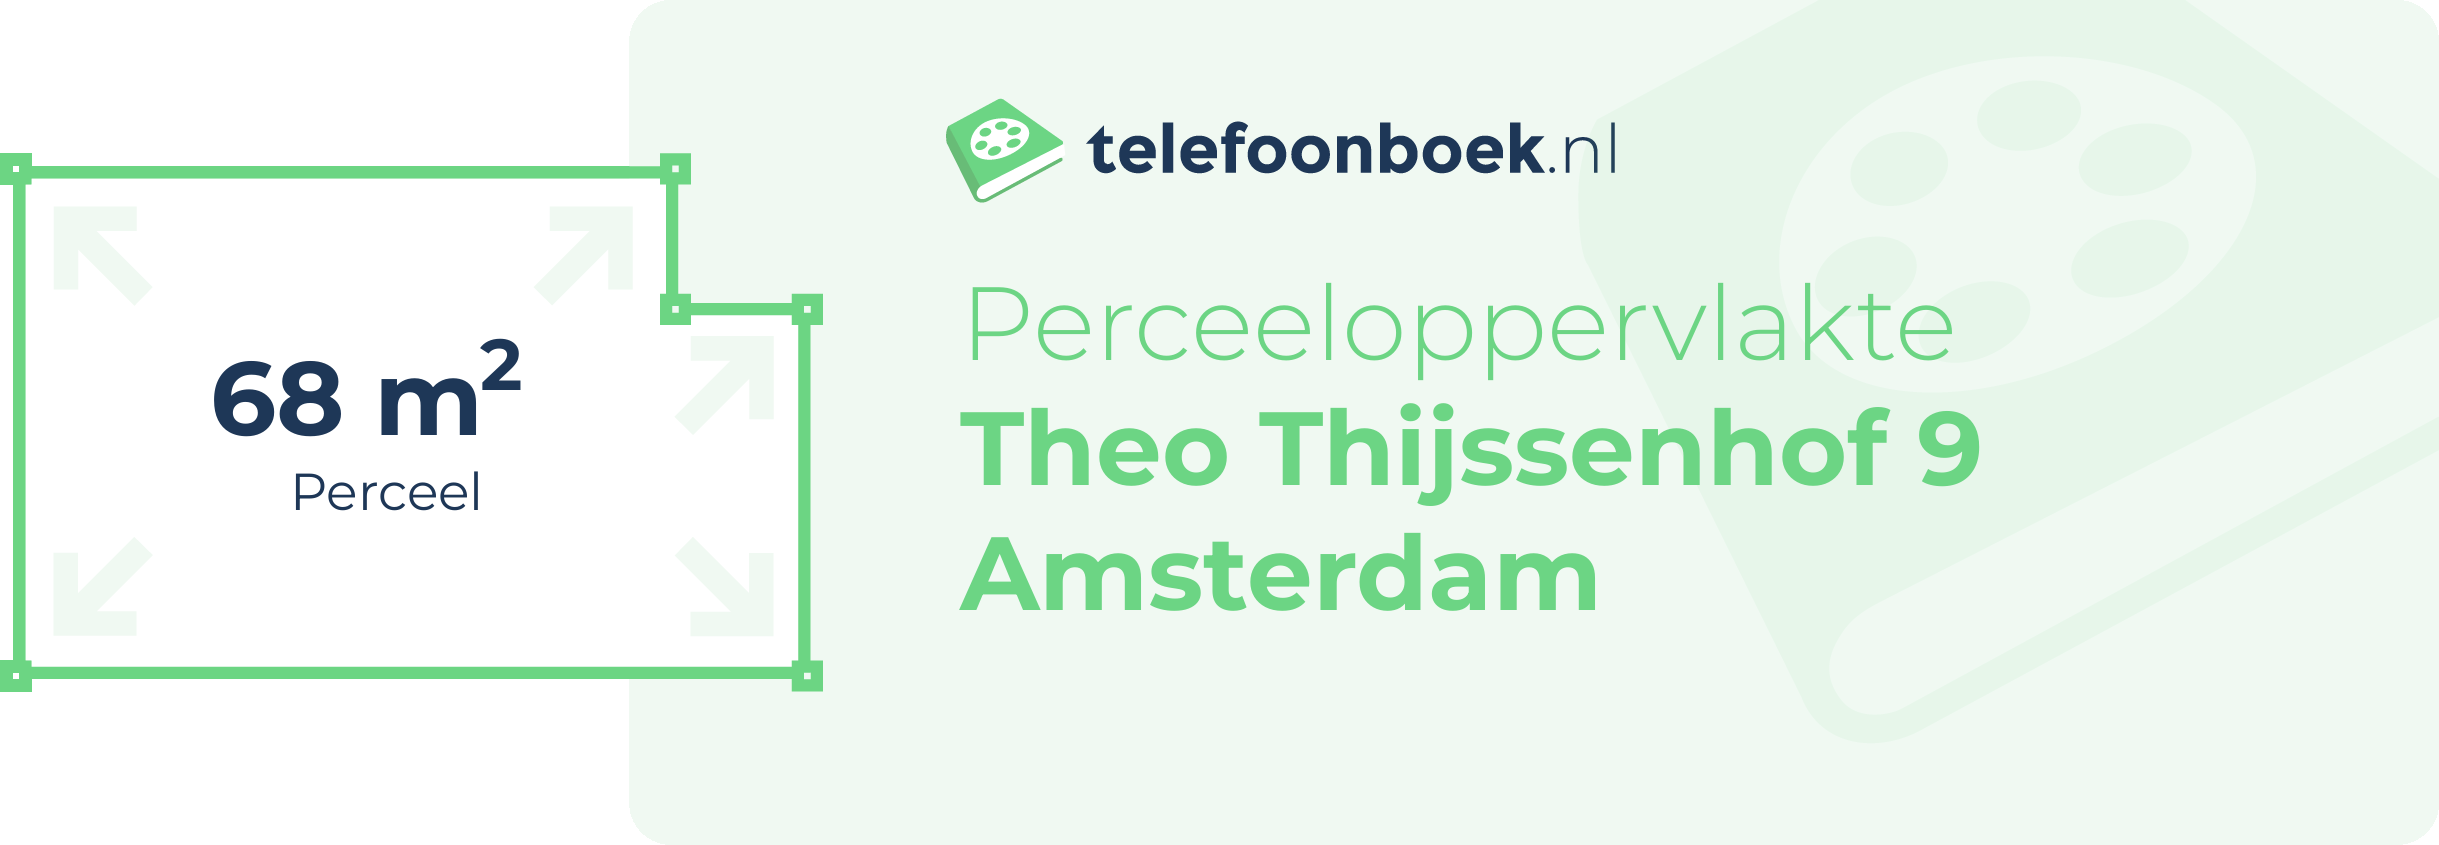 Perceeloppervlakte Theo Thijssenhof 9 Amsterdam